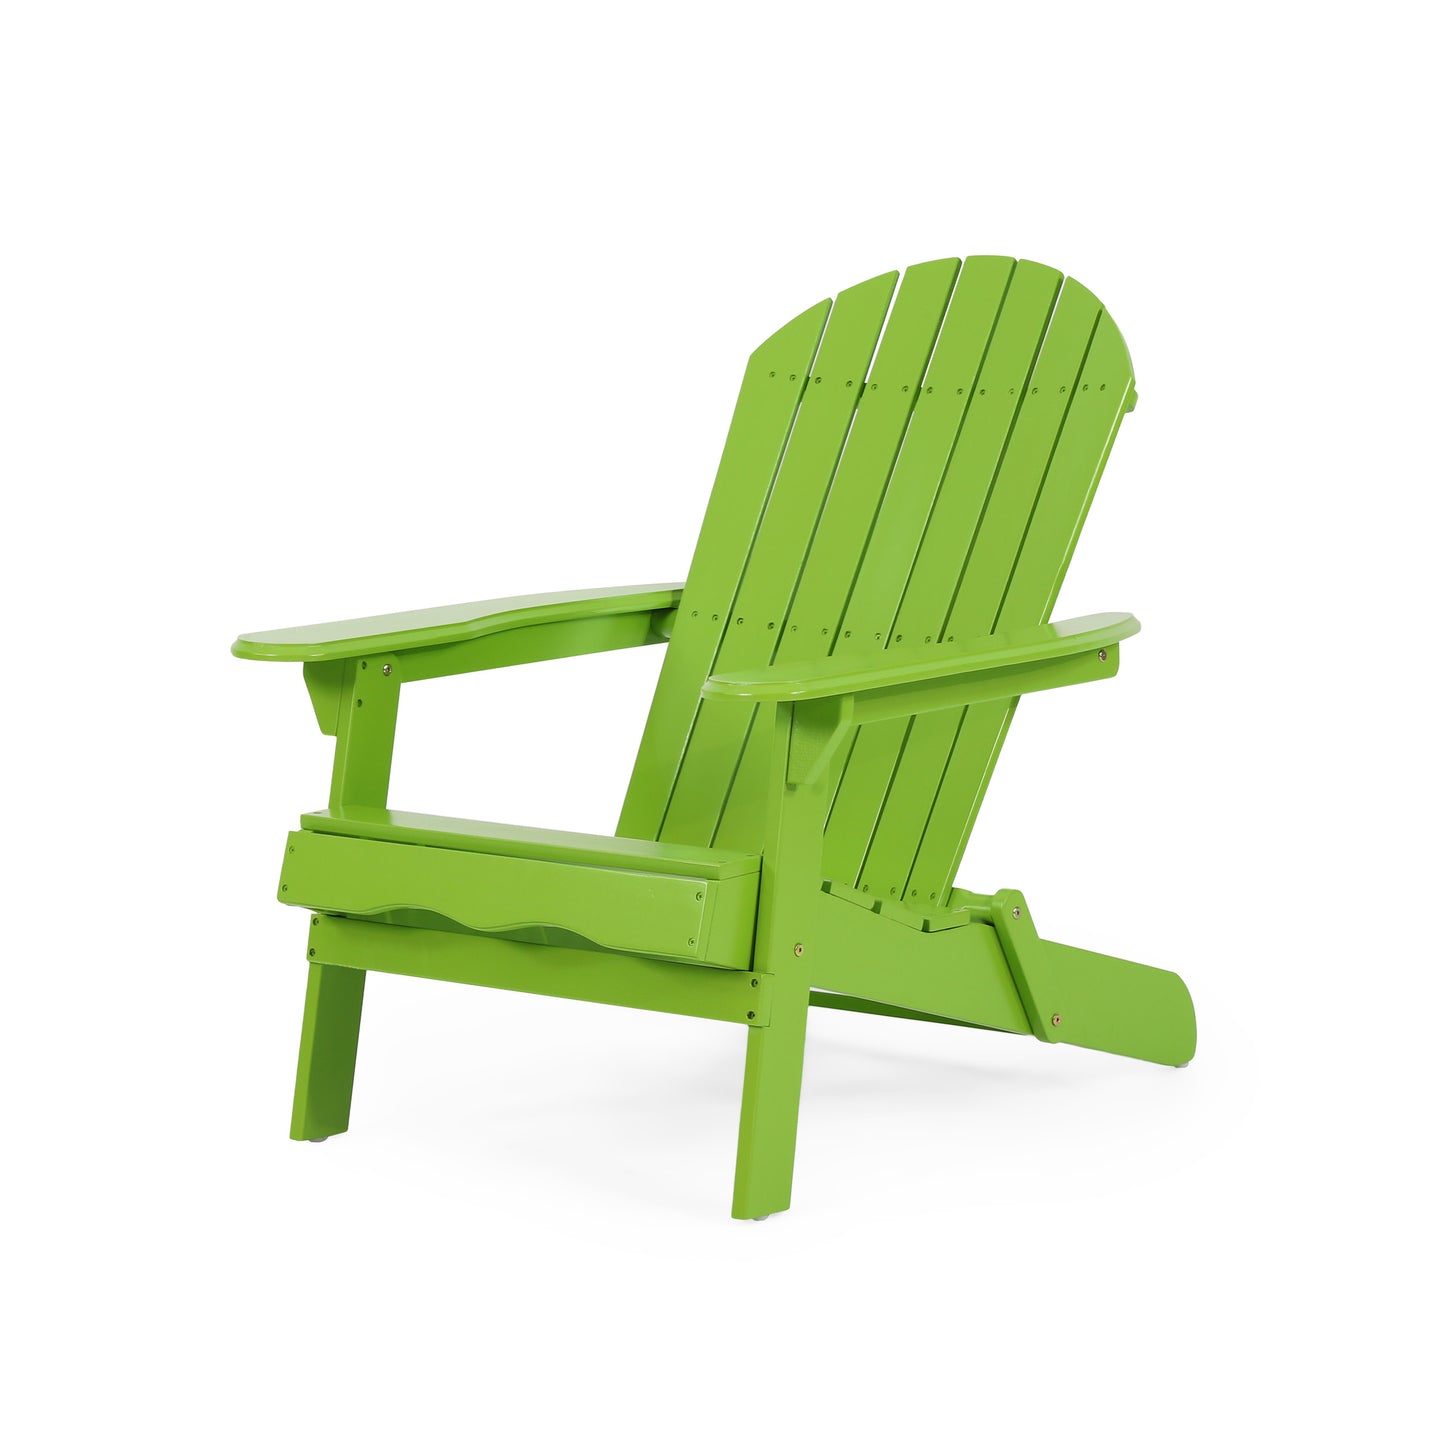 Cartagena Outdoor Acacia Wood Adirondack Chair